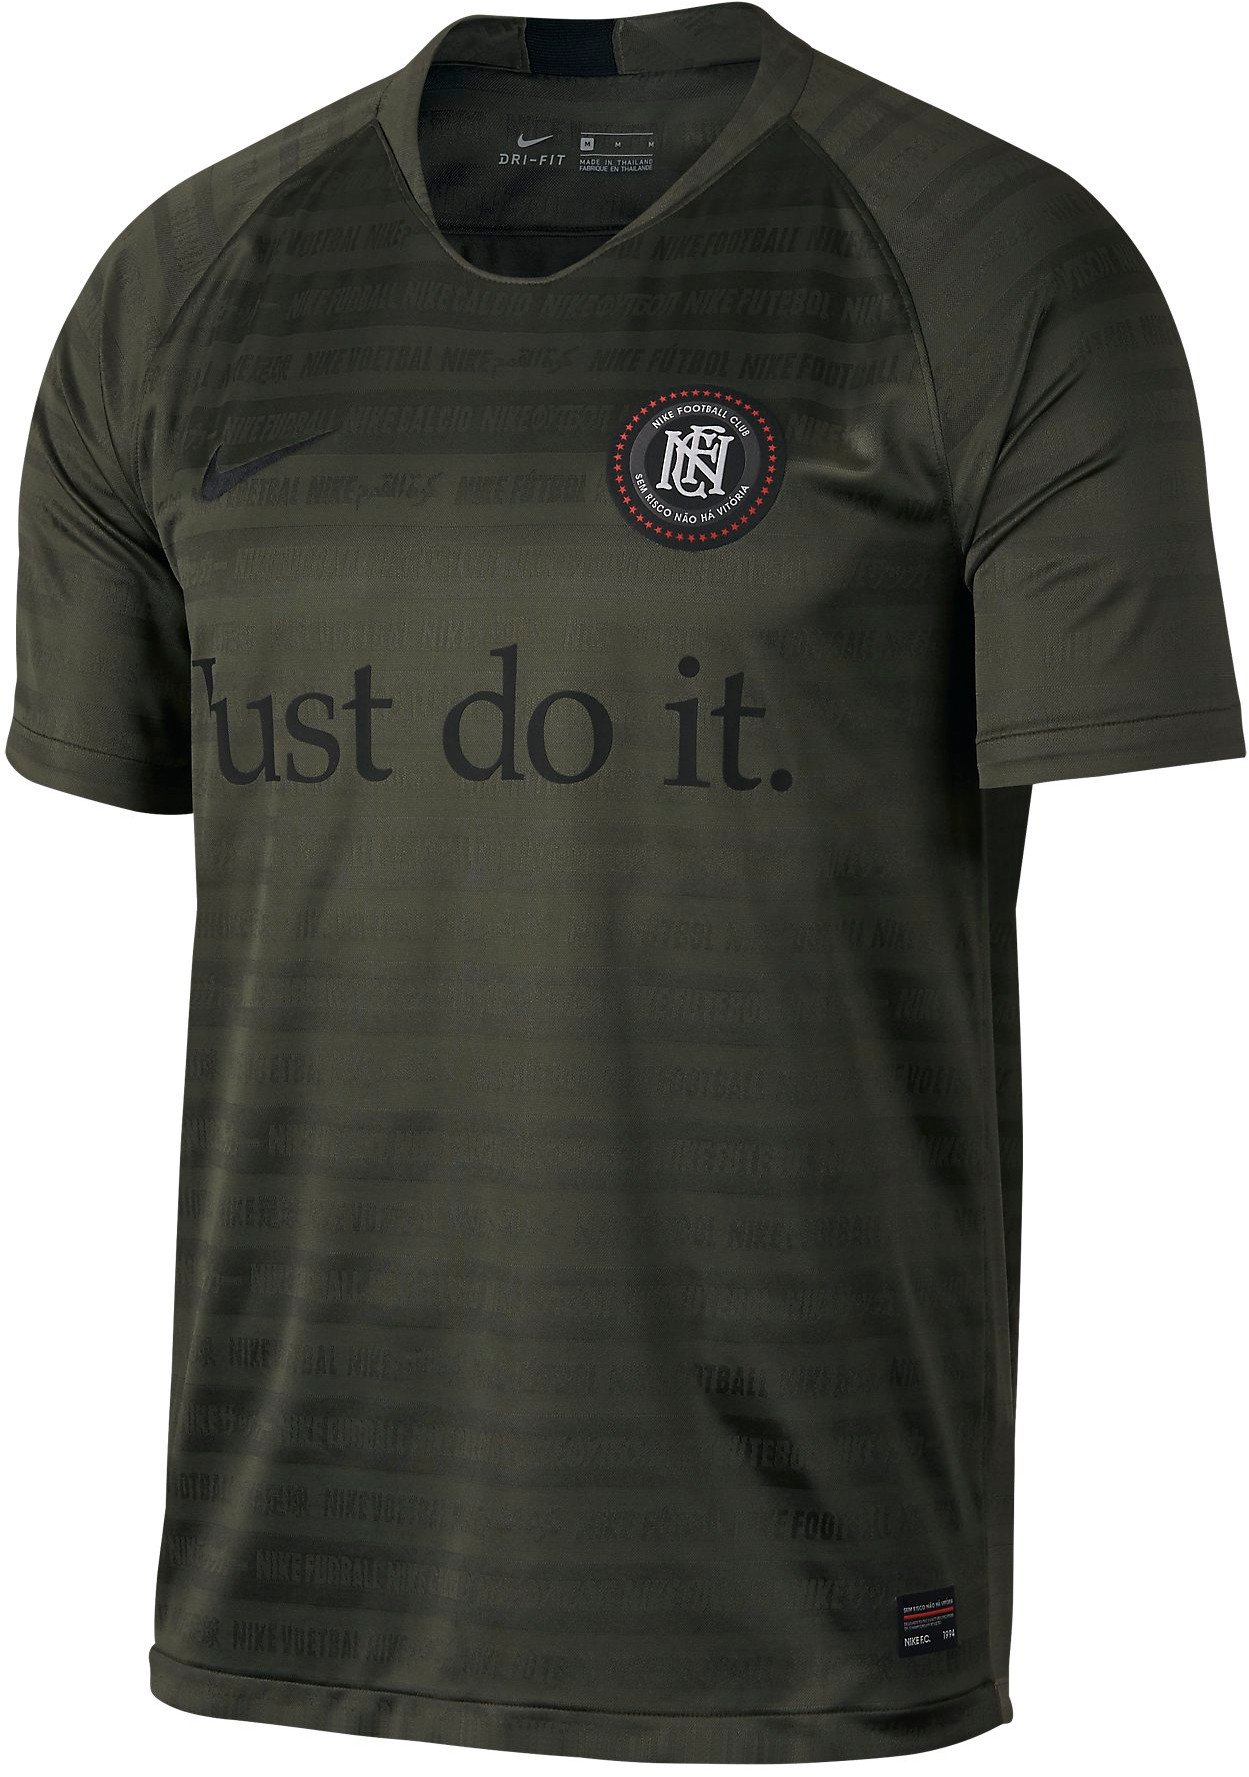 Pánský fotbalový dres s krátkým rukávem Nike FC Away